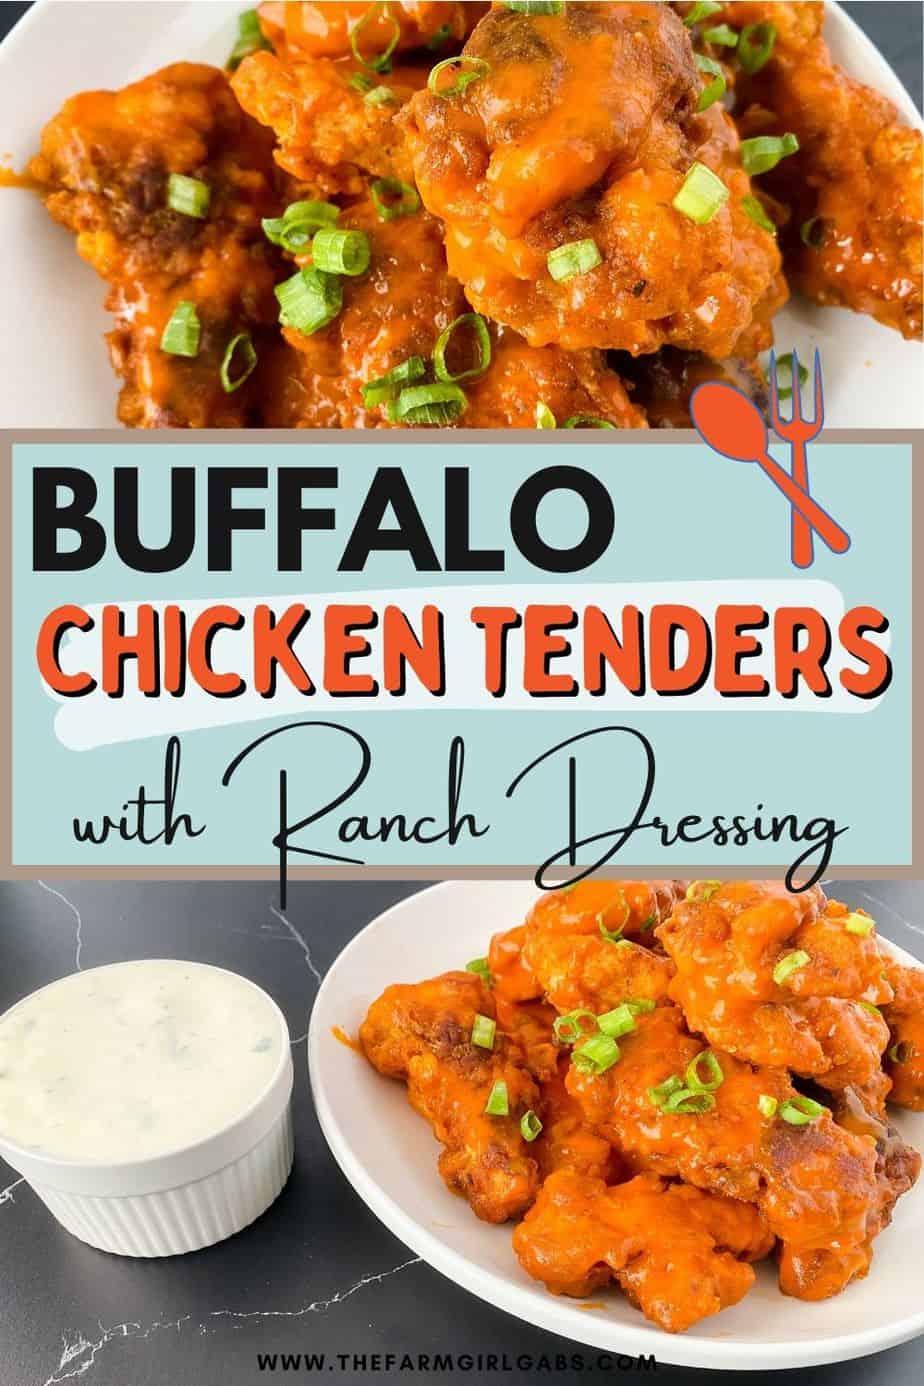 Buffalo Chicken Tenders With Ranch Dipping Sauce - The Farm Girl Gabs®